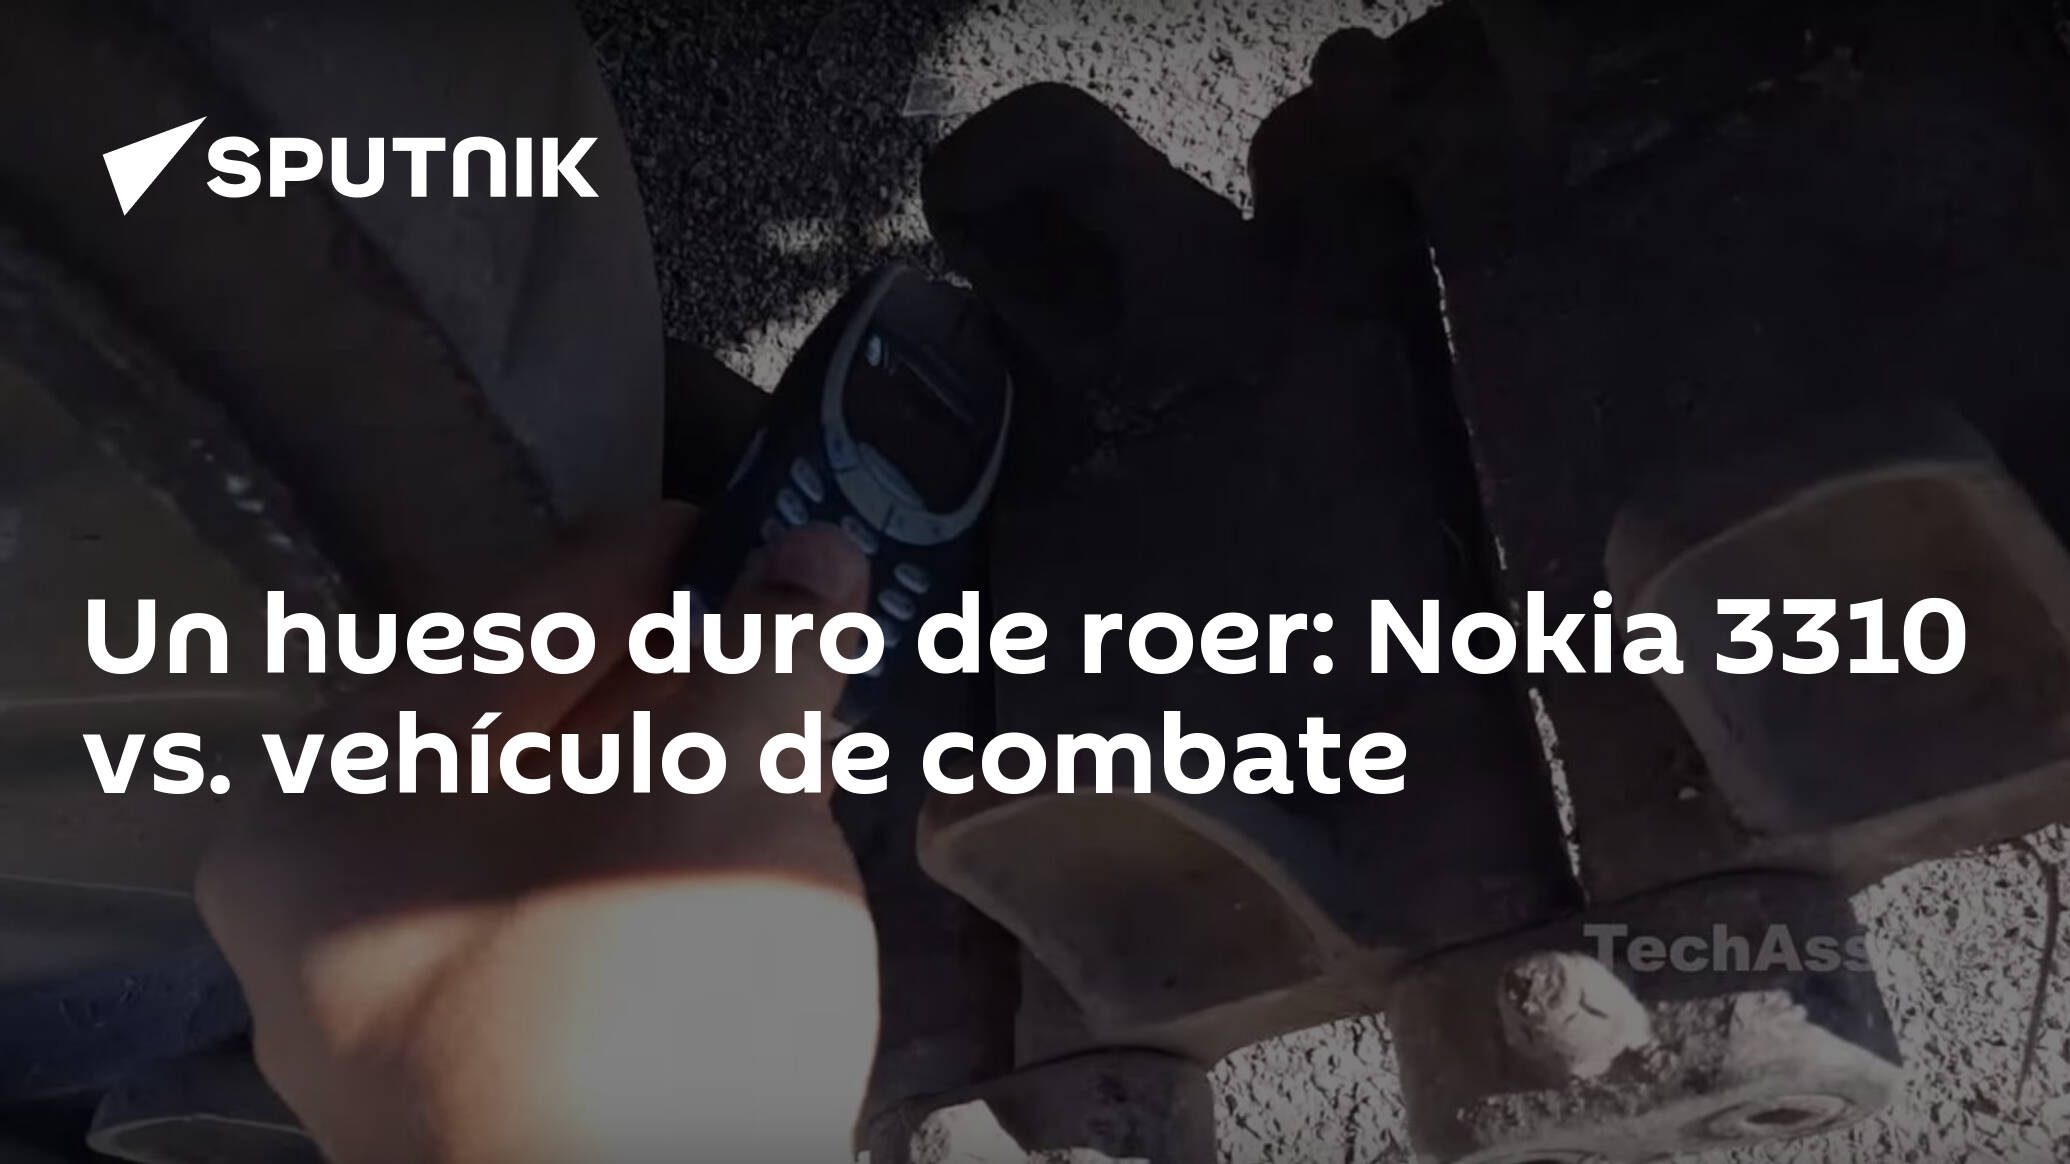 Nokia resucita el 3310